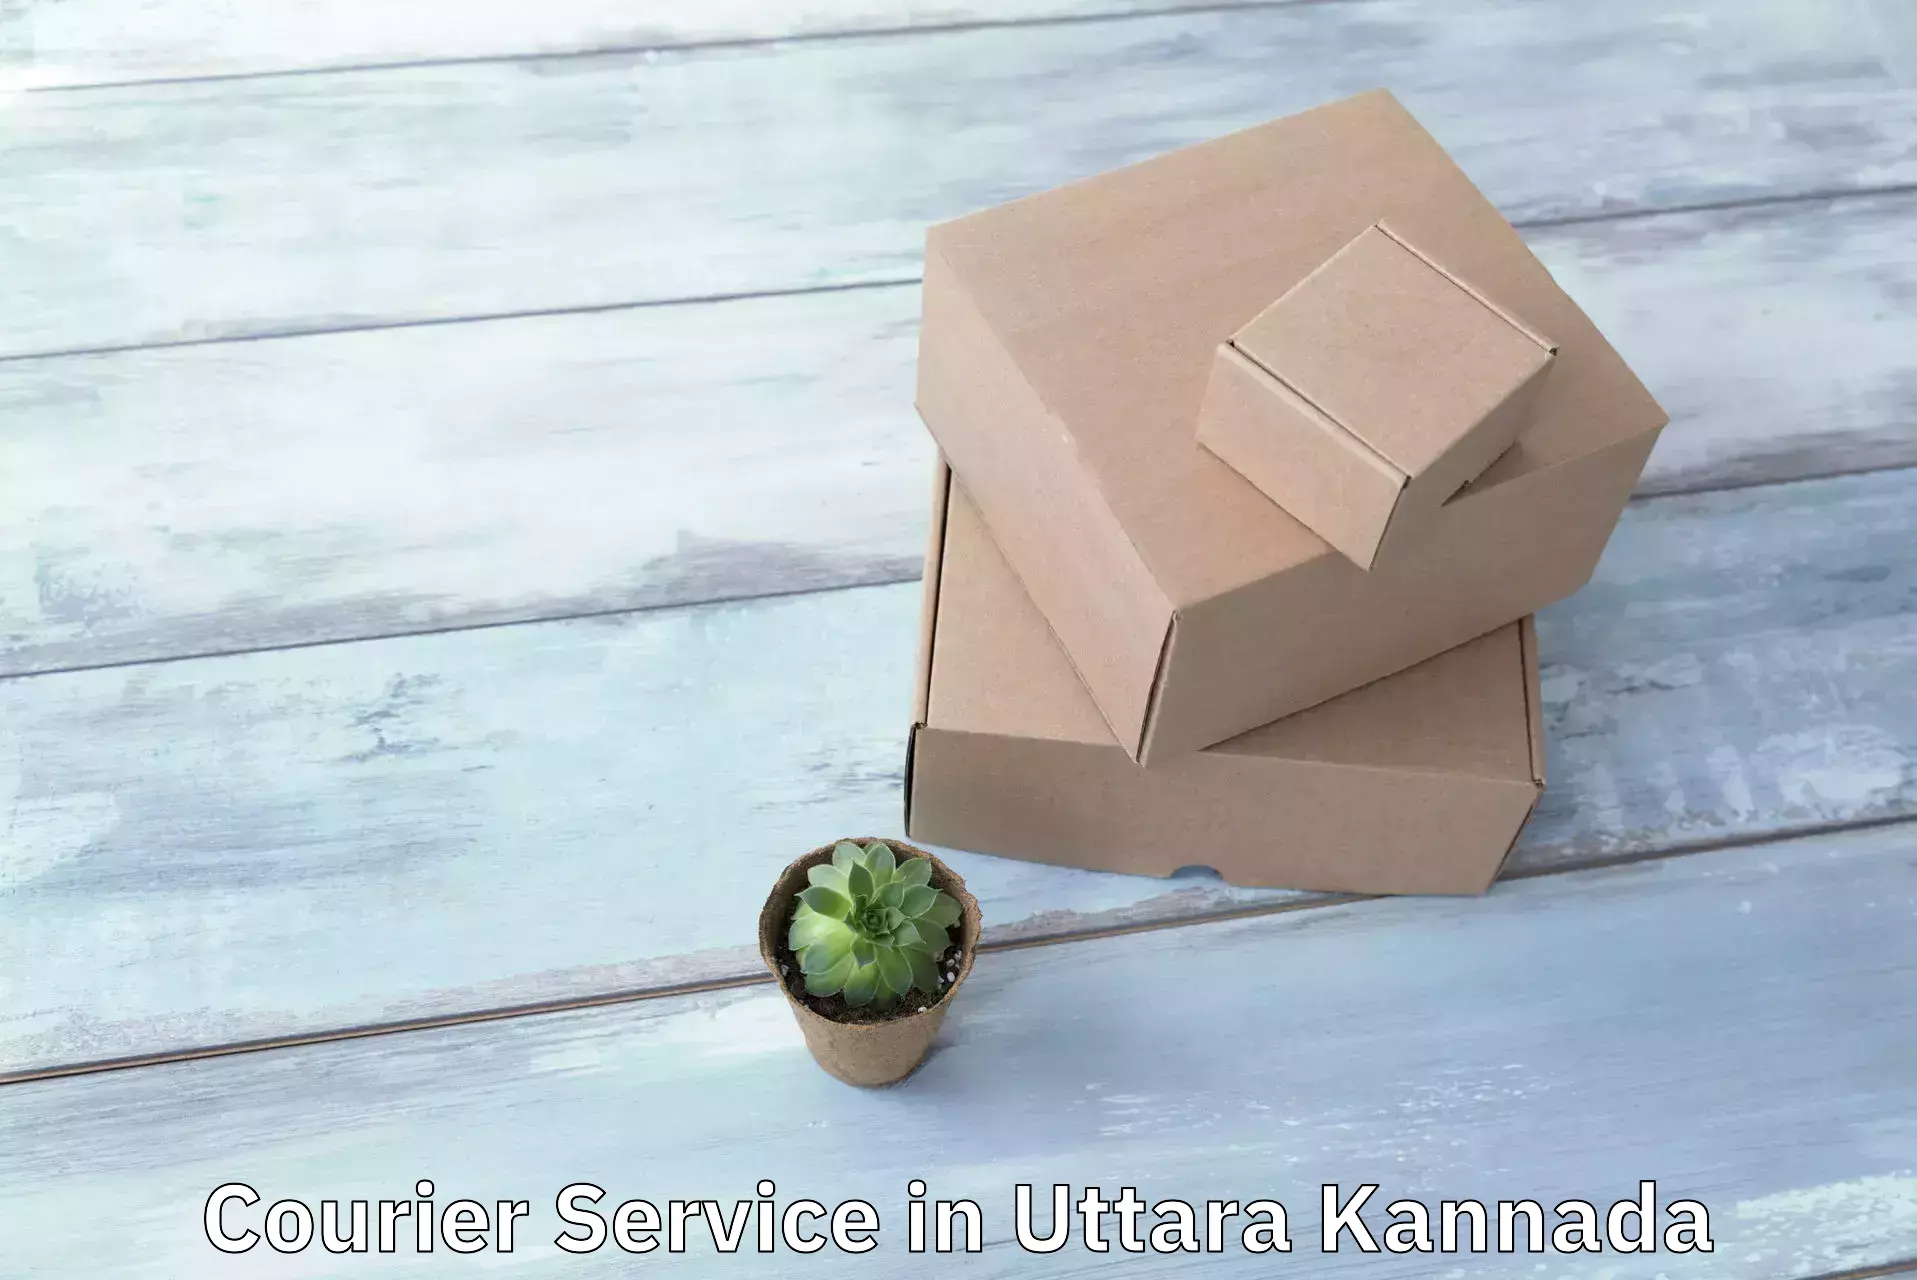 Same-day delivery options in Uttara Kannada